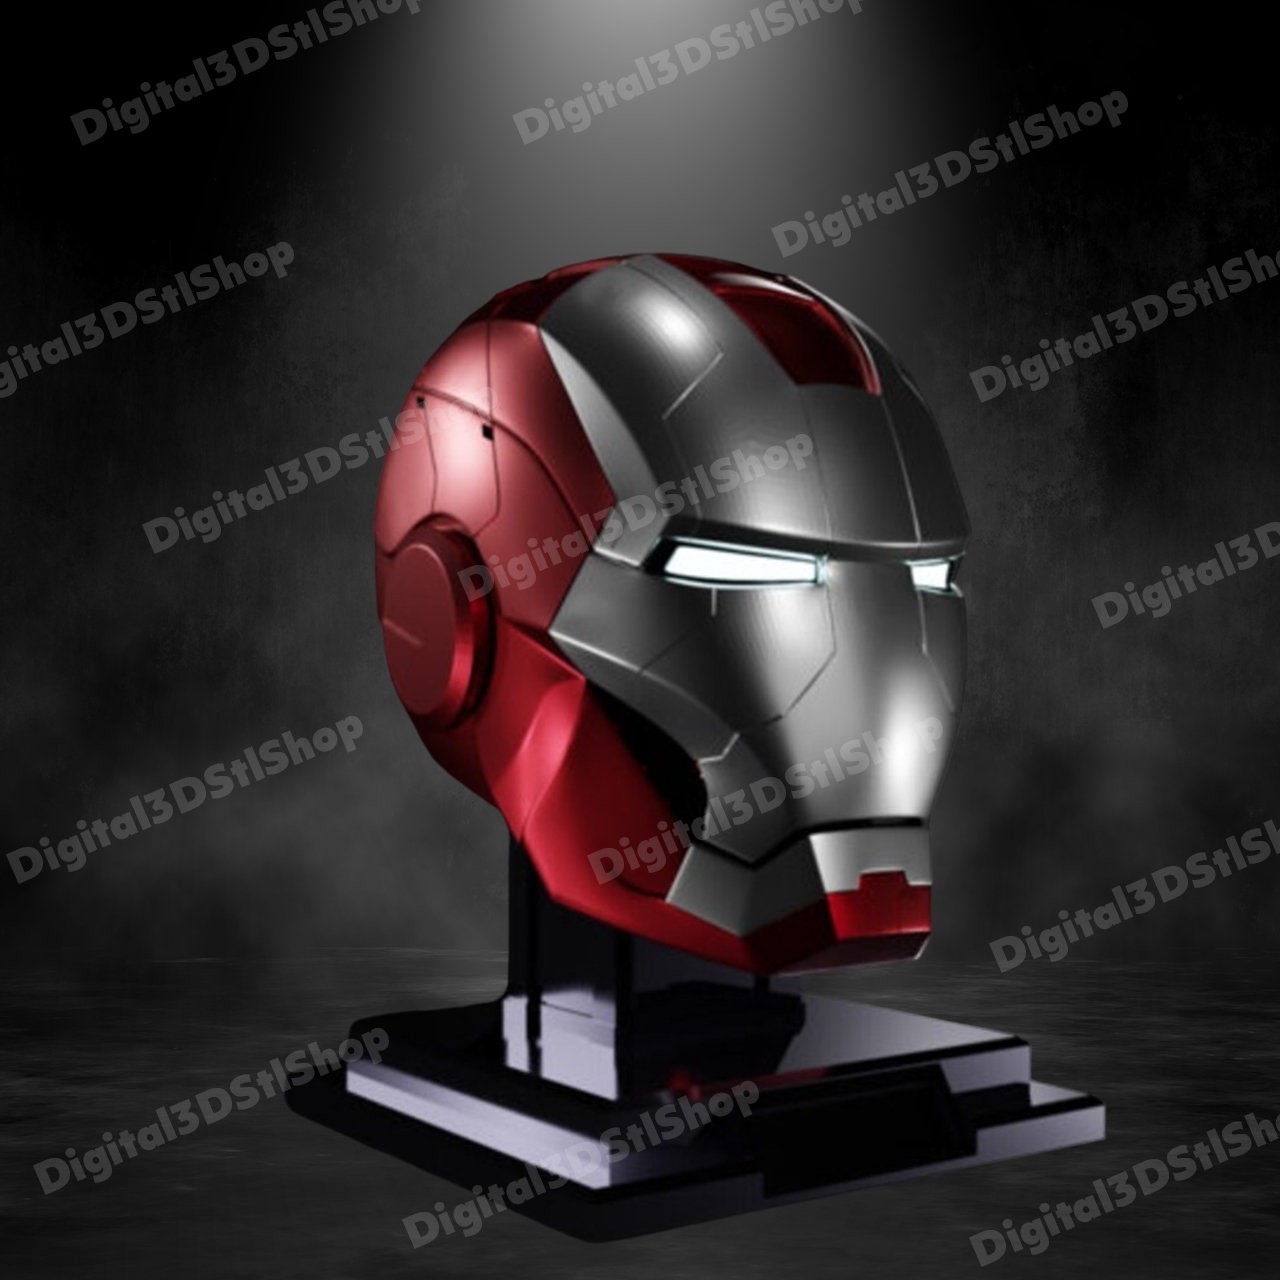 Helmet Stand, Mask Stand, Helmet Holder, Stand of the Helmet, Iron Man  Helmet Stand, Spiderman Mask Stand, Captain America Helmet Stand 